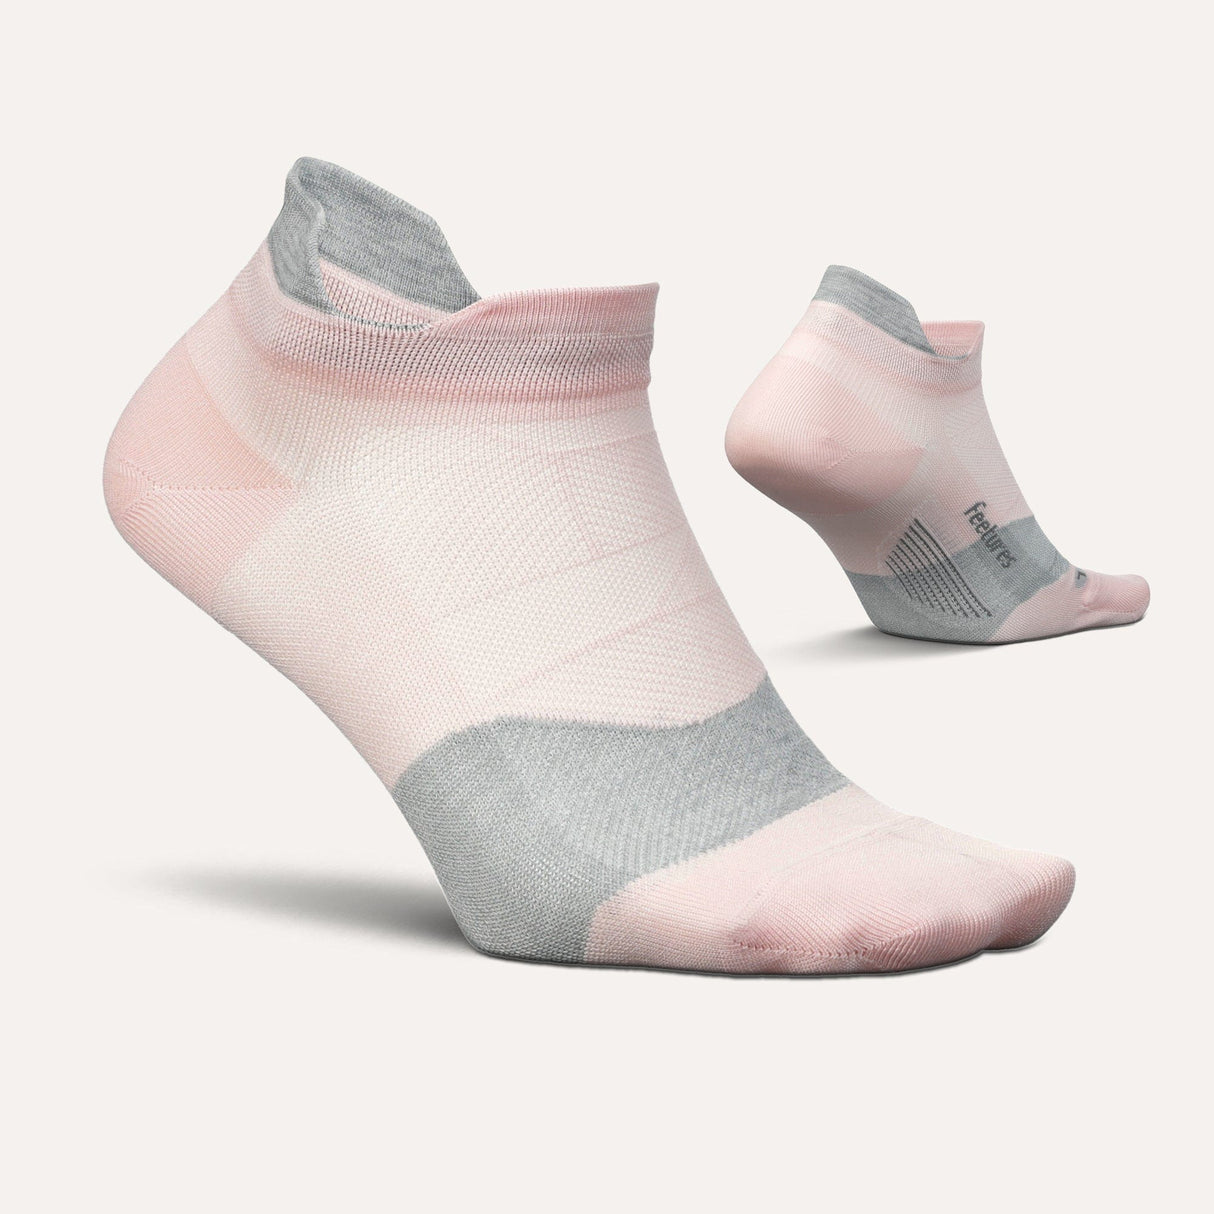 Feetures Elite Ultra Light No Show Tab Socks  - 